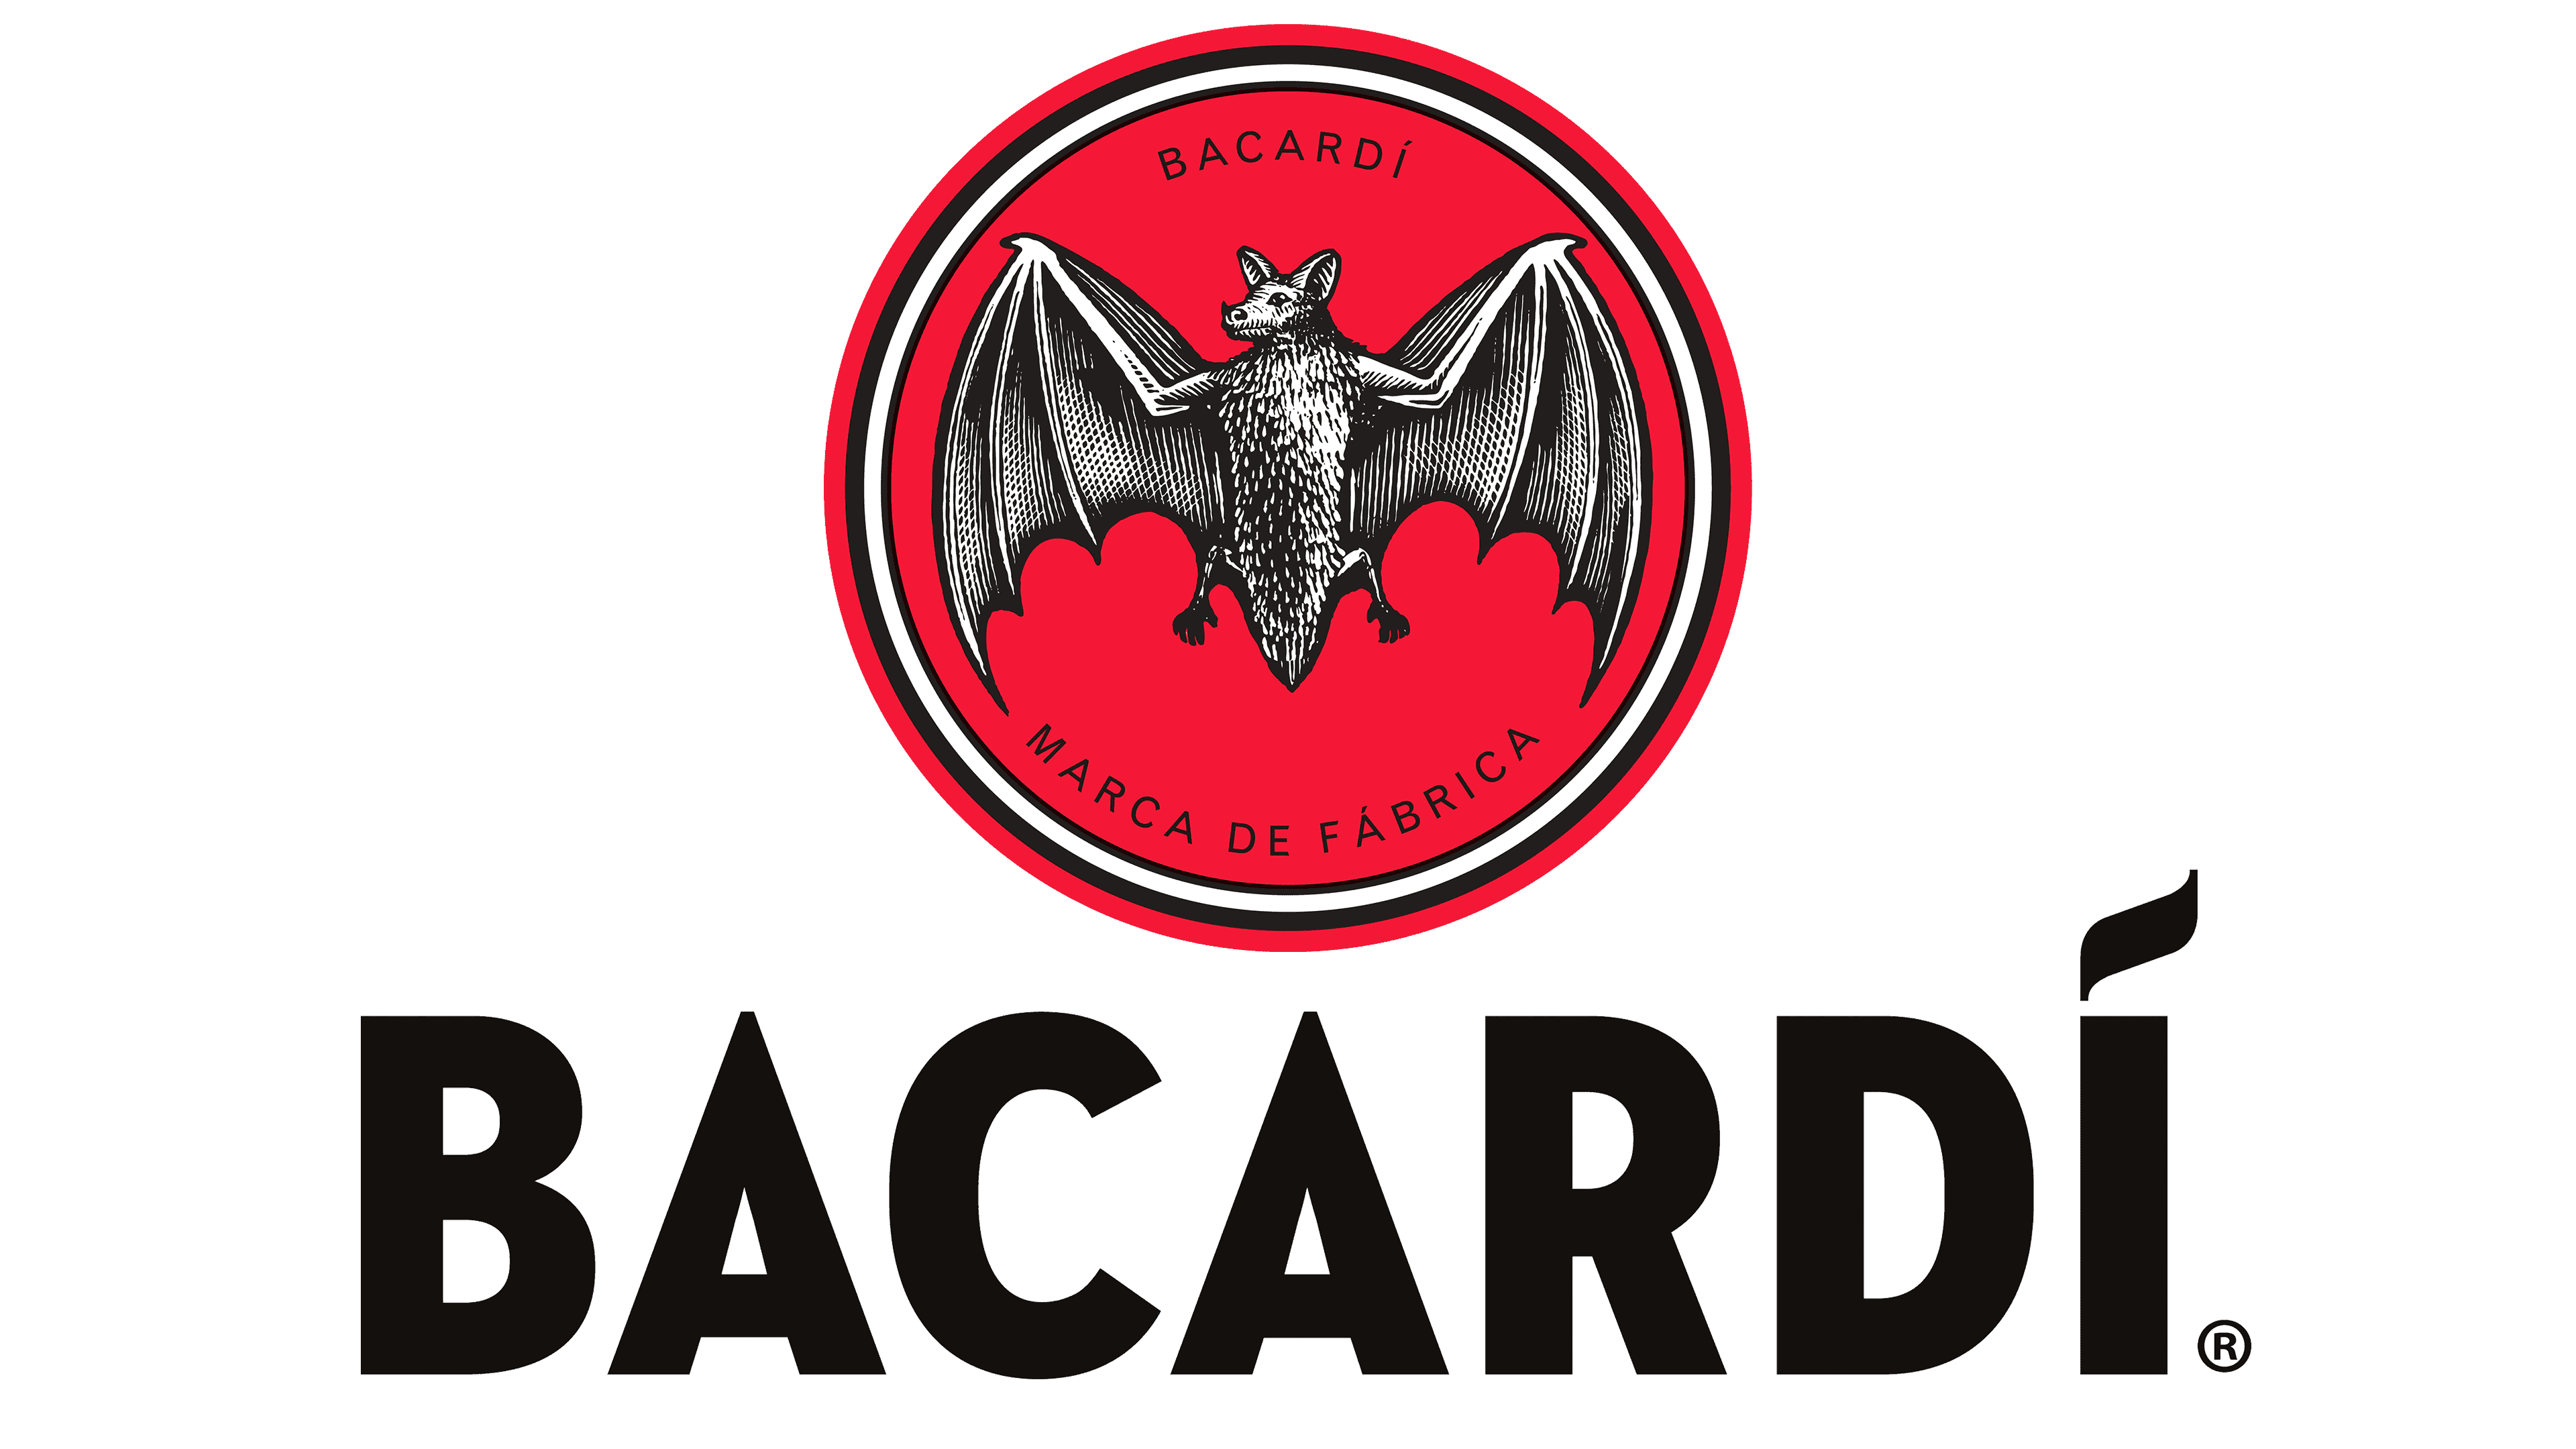 Bacardi logo, Vector Logo of Bacardi brand free download (eps, ai, png,  cdr) formats